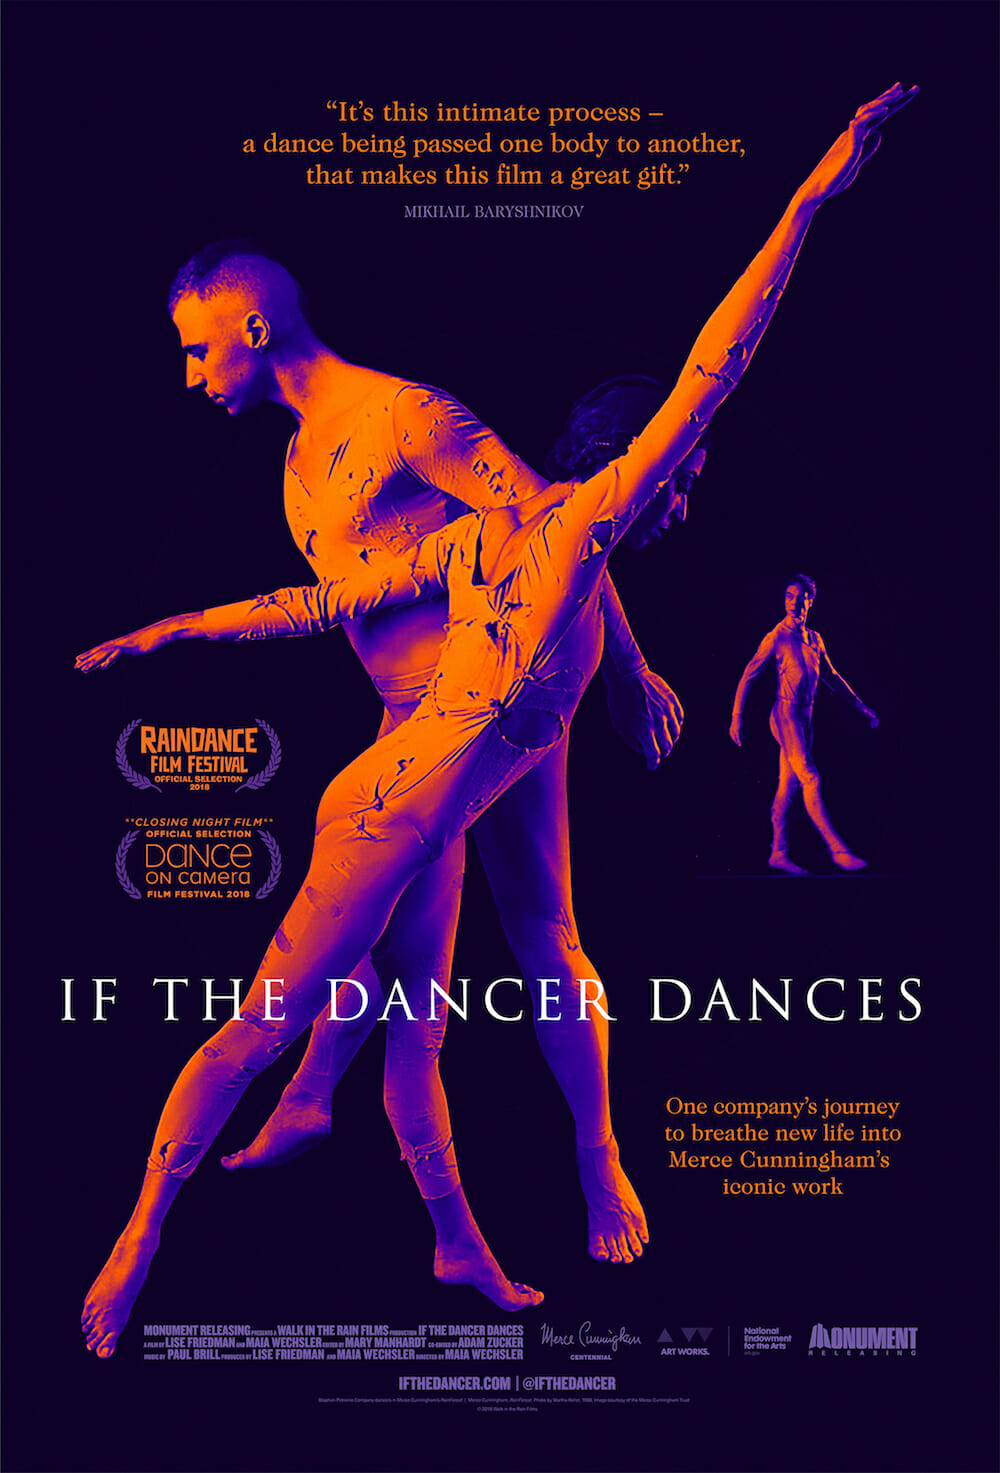 IF THE DANCER DANCES